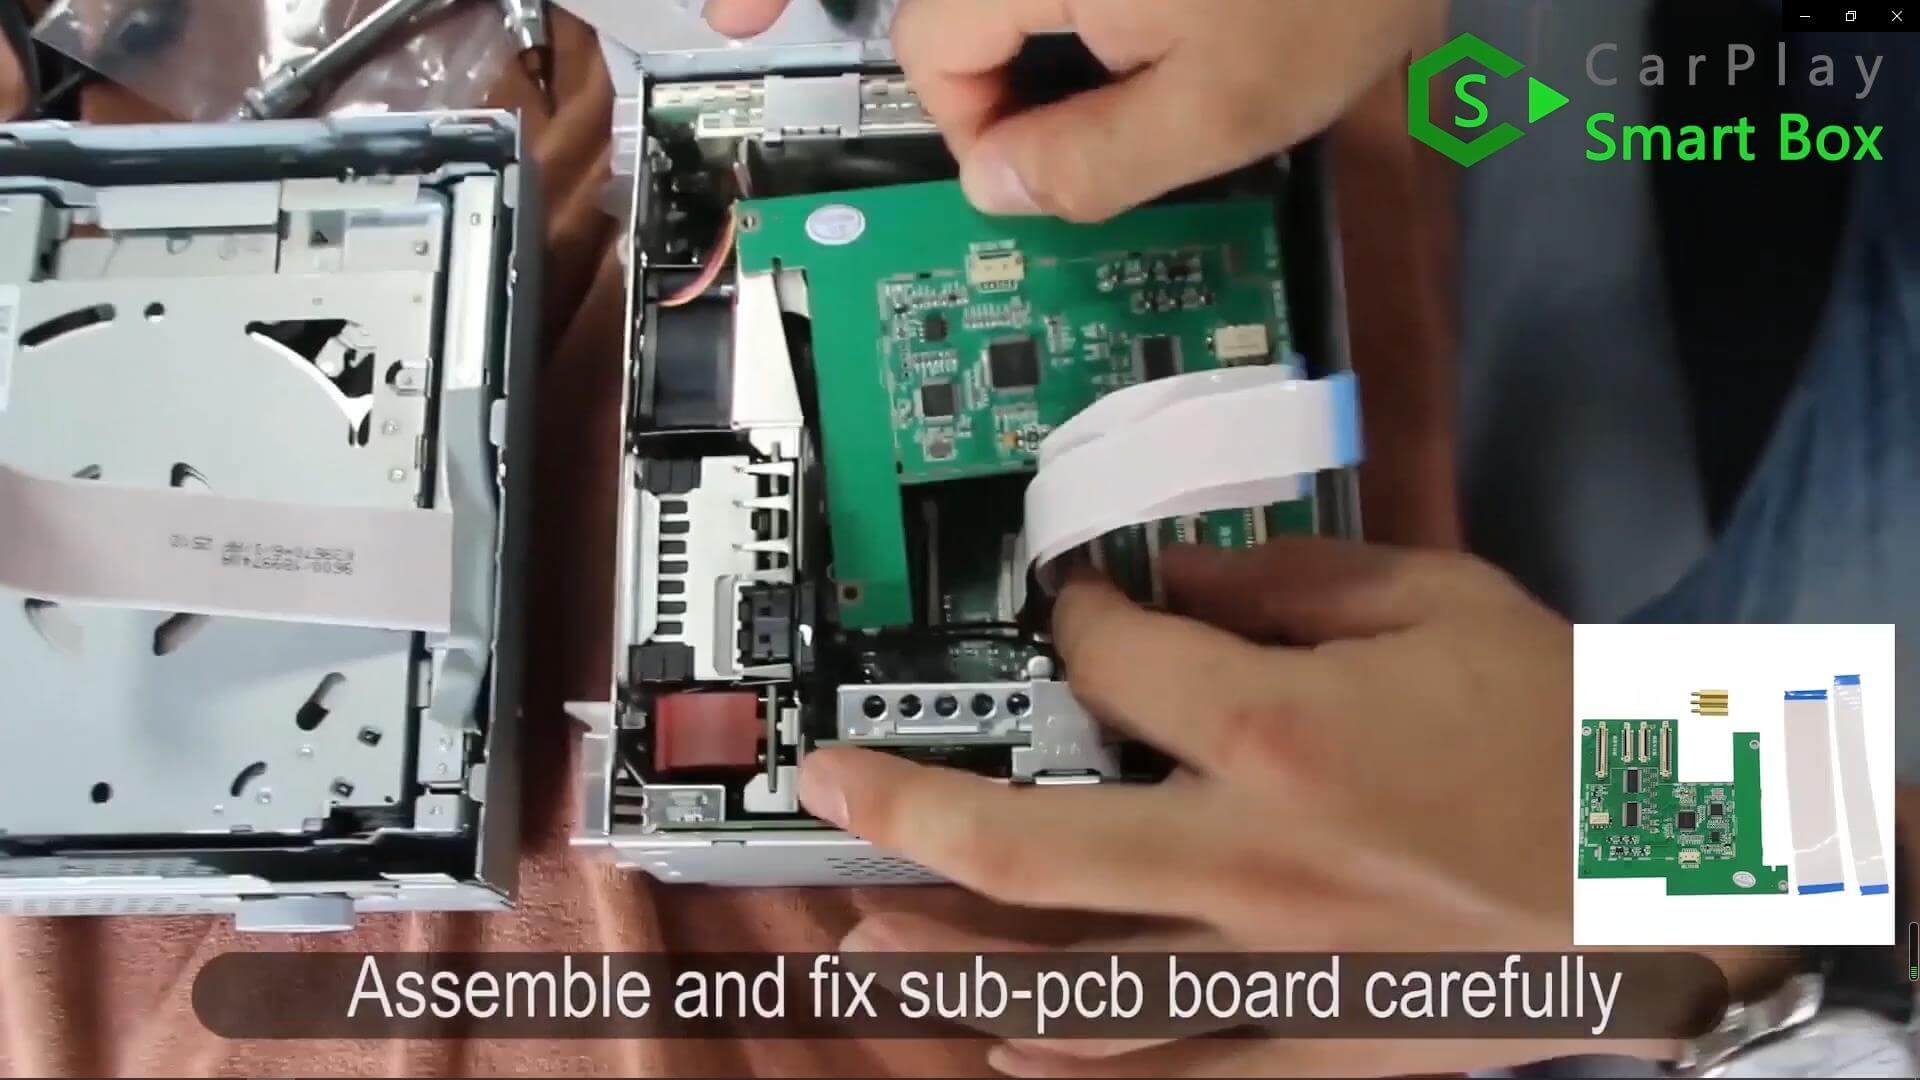 5. Assemble and fix sub-PCB board carefully - Wireless Apple CarPlay Smart Box for Porsche 911 PCM3.1 Head unit - CarPlay Smart Box